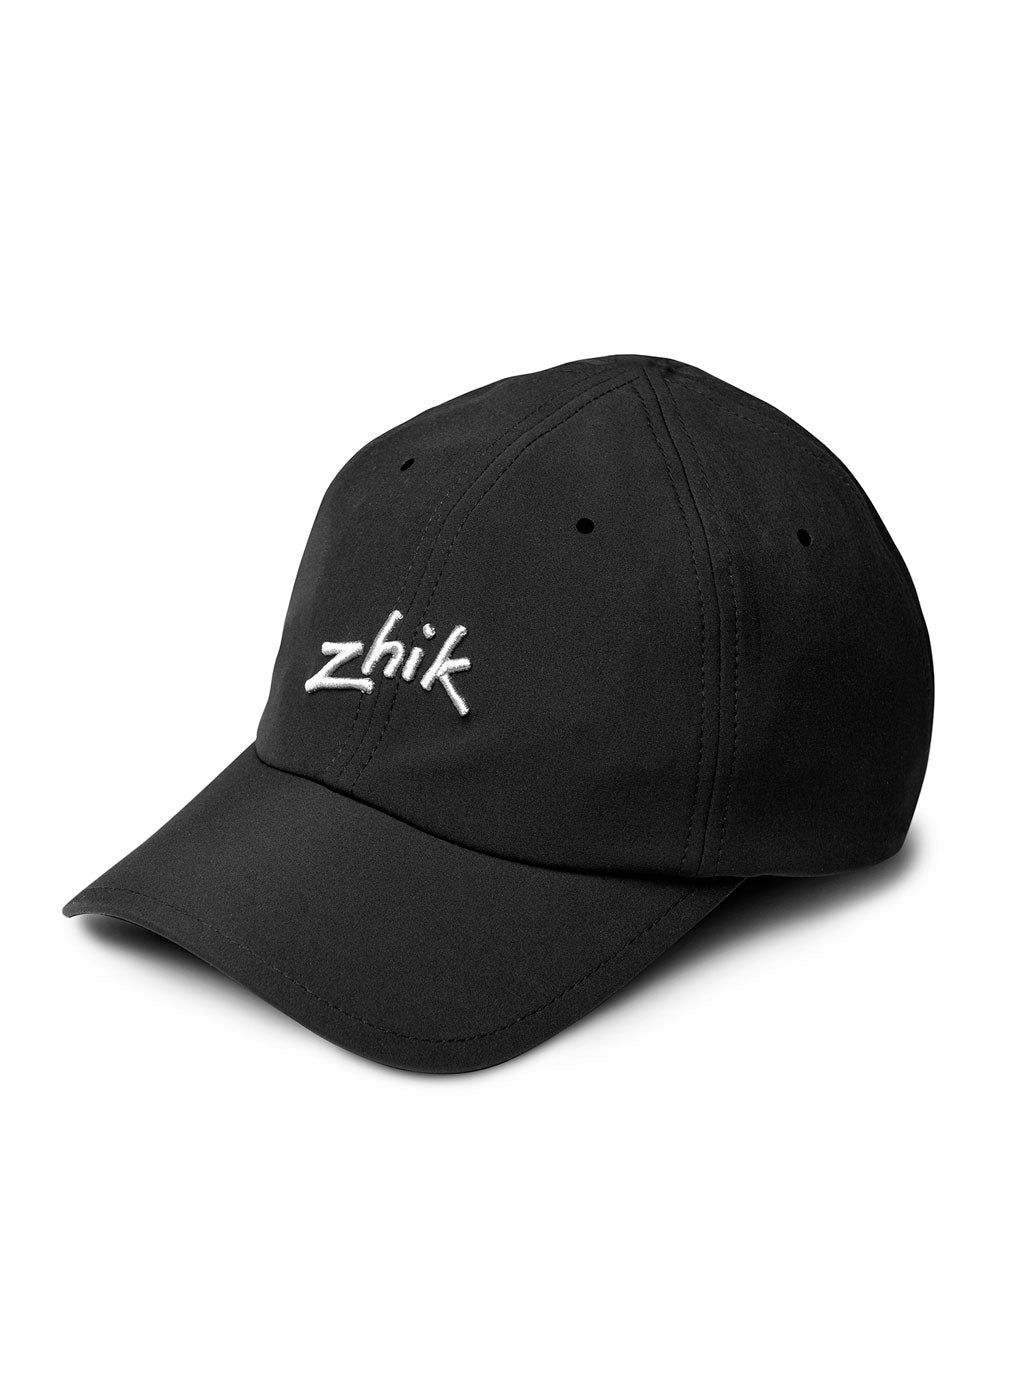 Zhik Sailing Cap - Black | SendIt Sailing